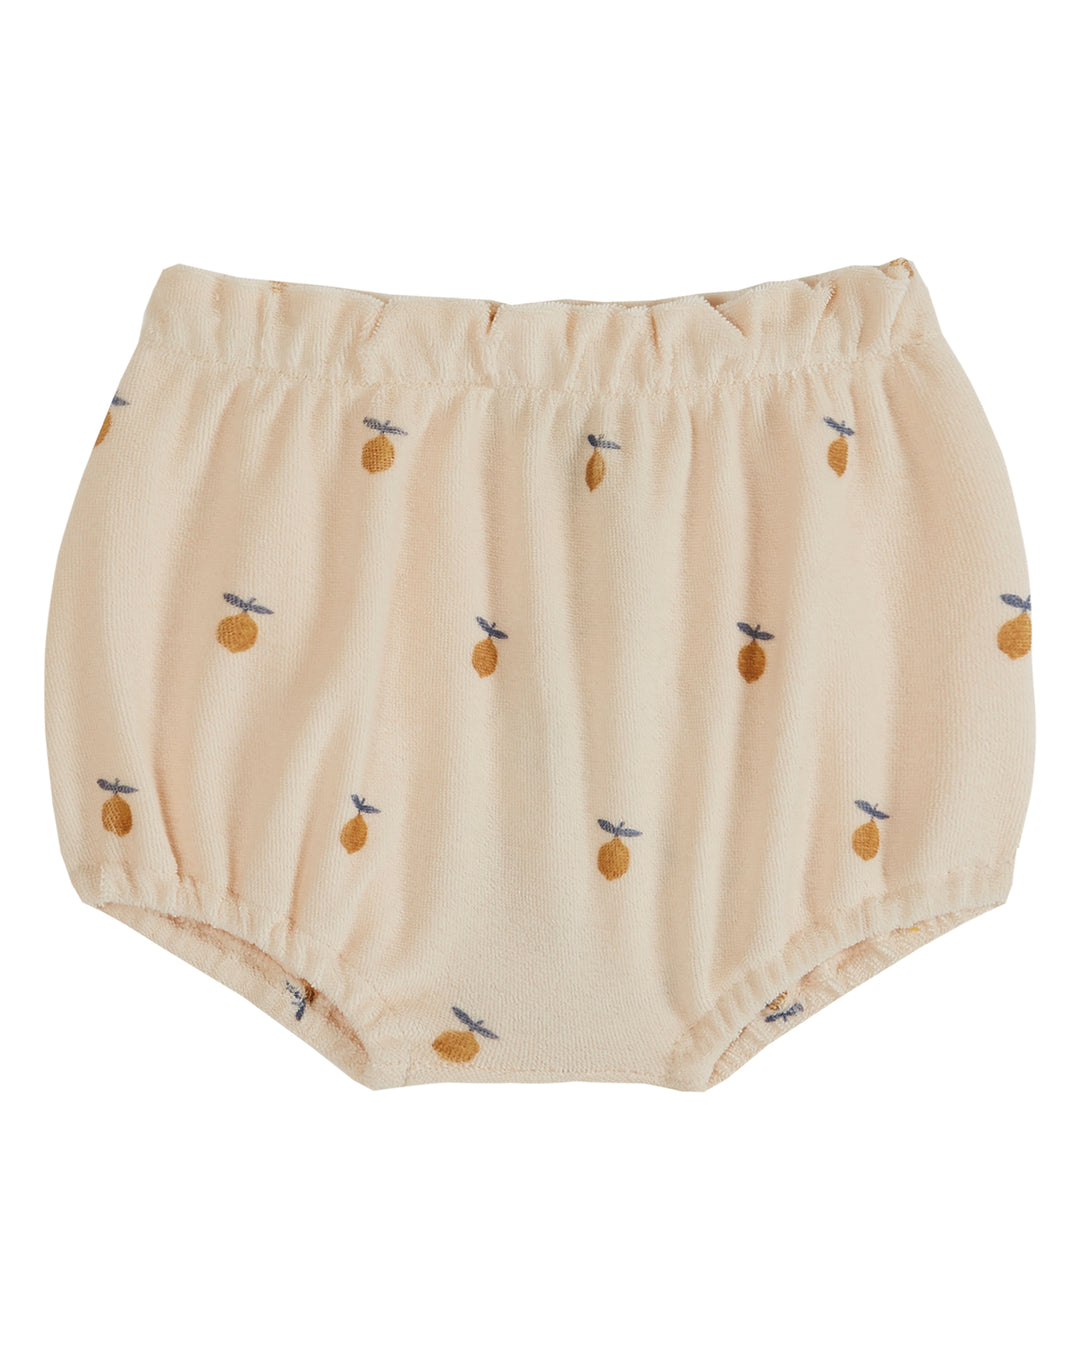 EMILE ET IDA Baby Bloomer Shorts in Granny Apples